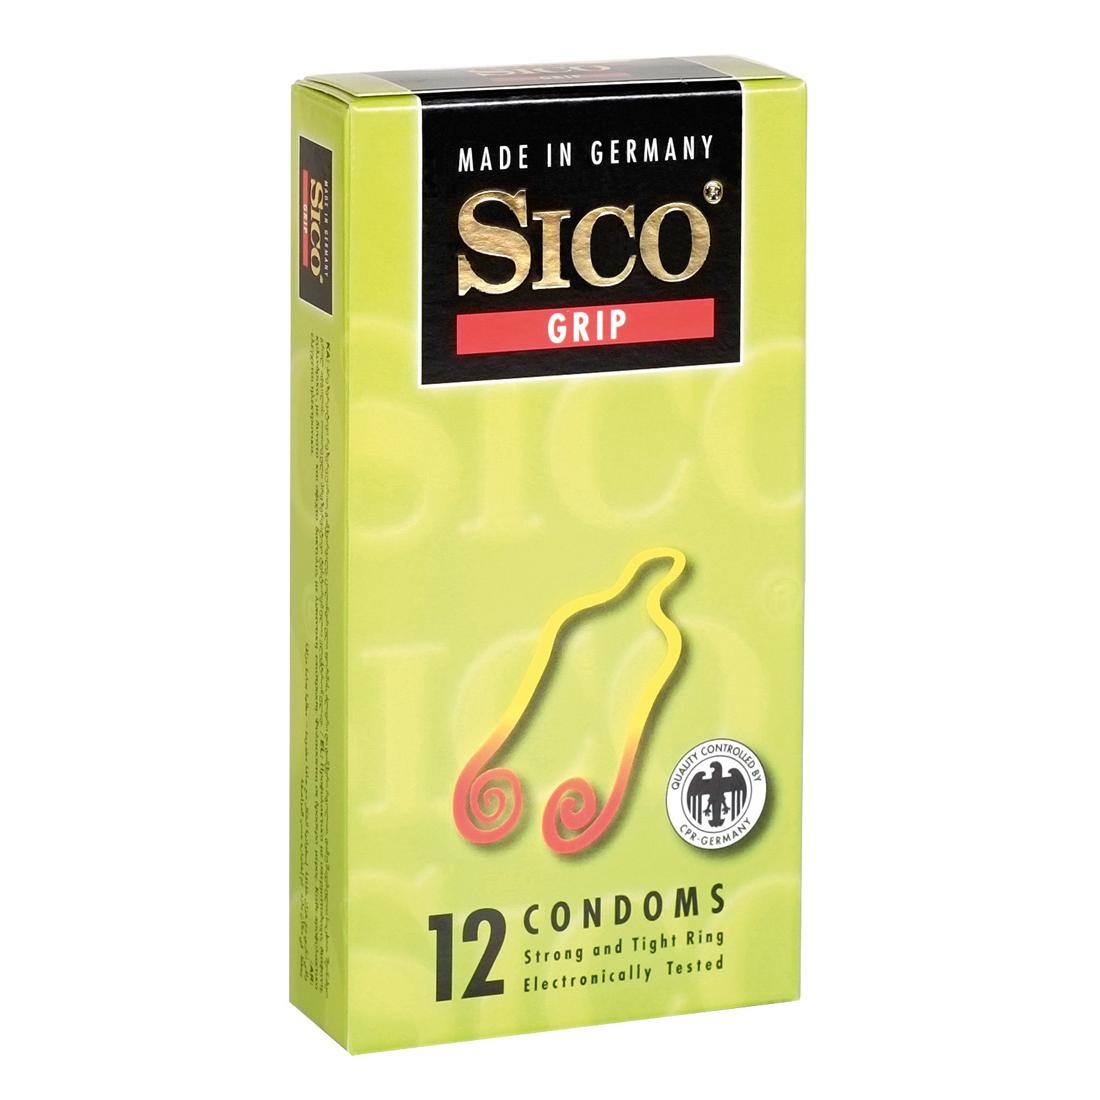  SICO  Grip  12er  -  Kondome 